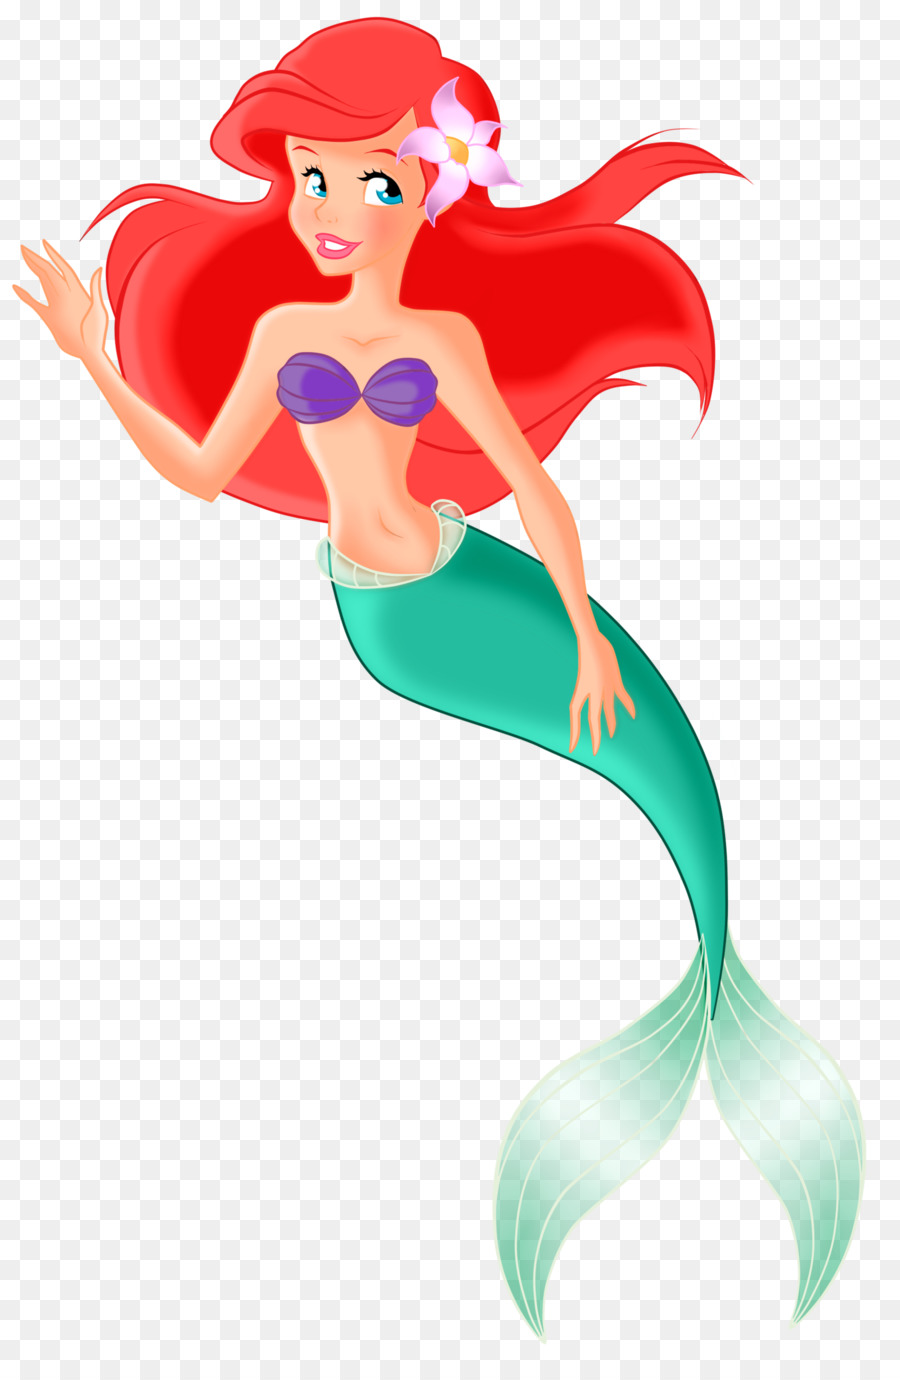 Ariel The Little Mermaid The Walt Disney Company Disney Princess Clip art - Mermaid png download - 1600*2419 - Free Transparent Ariel png Download.